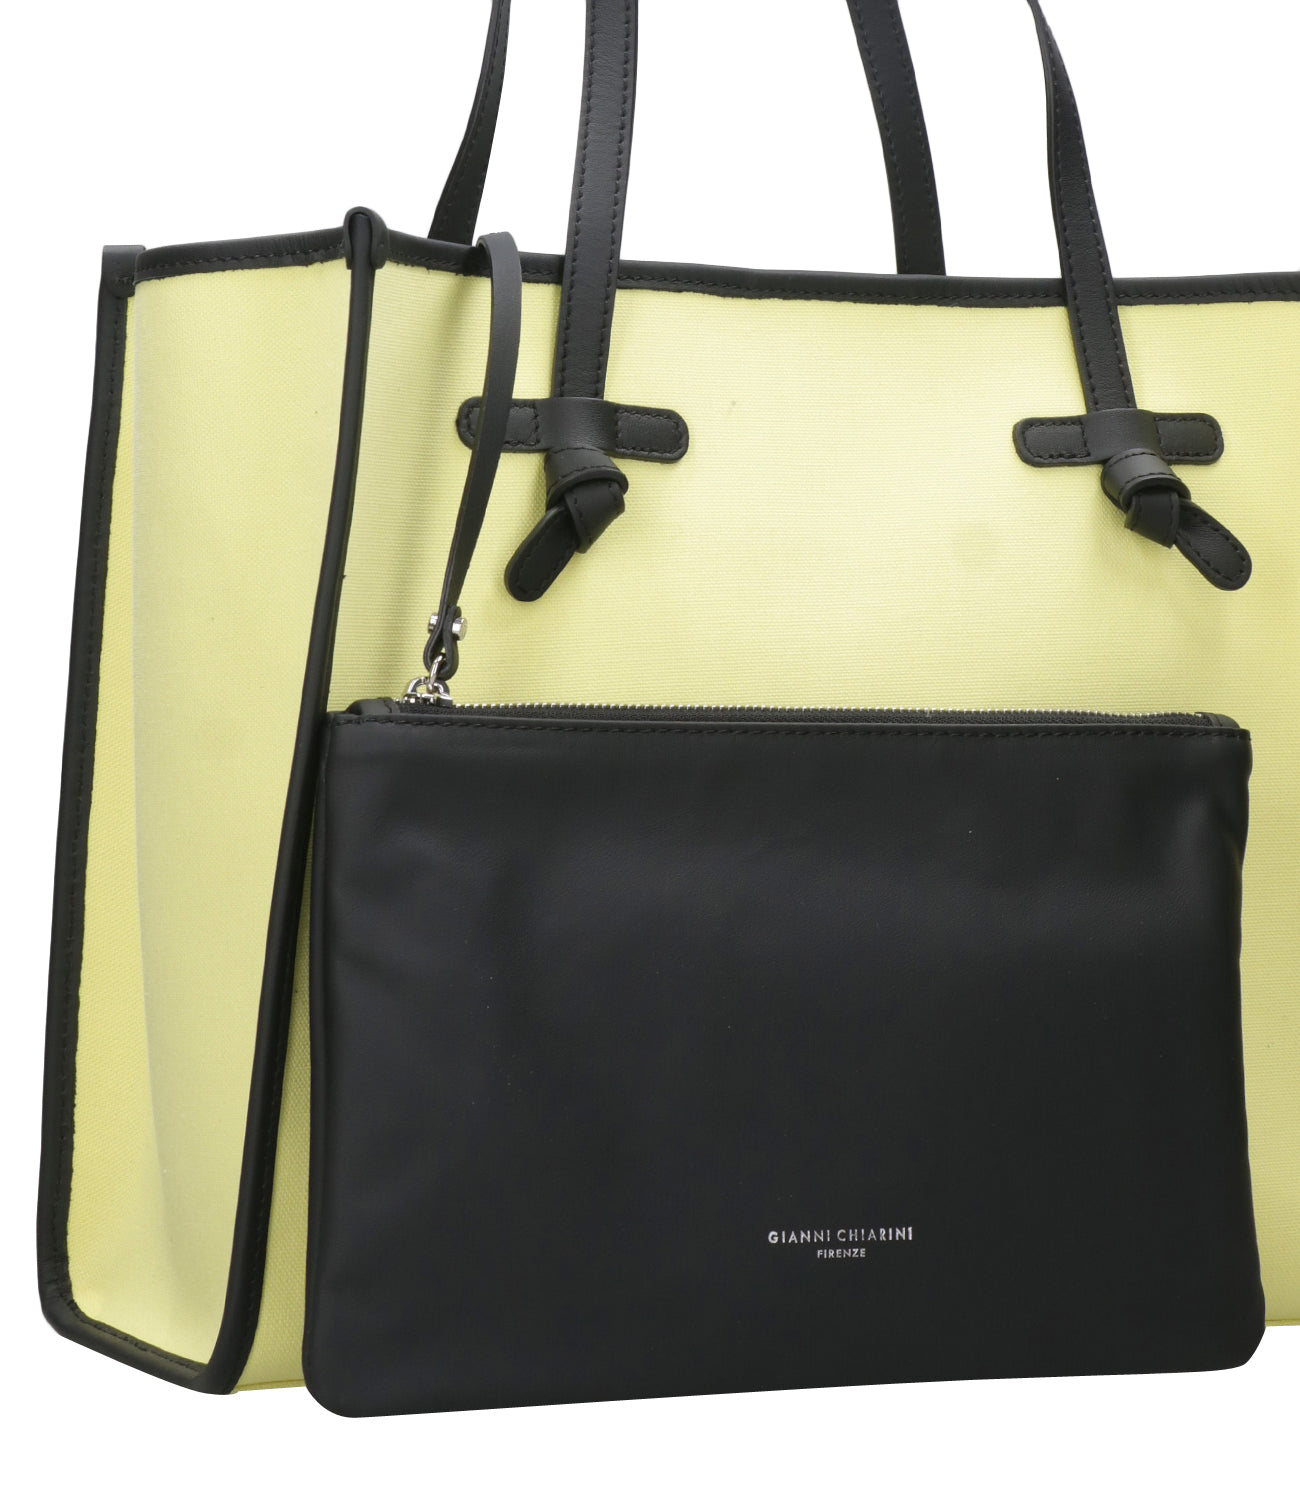 Marcella Club | Yellow and Black Bag